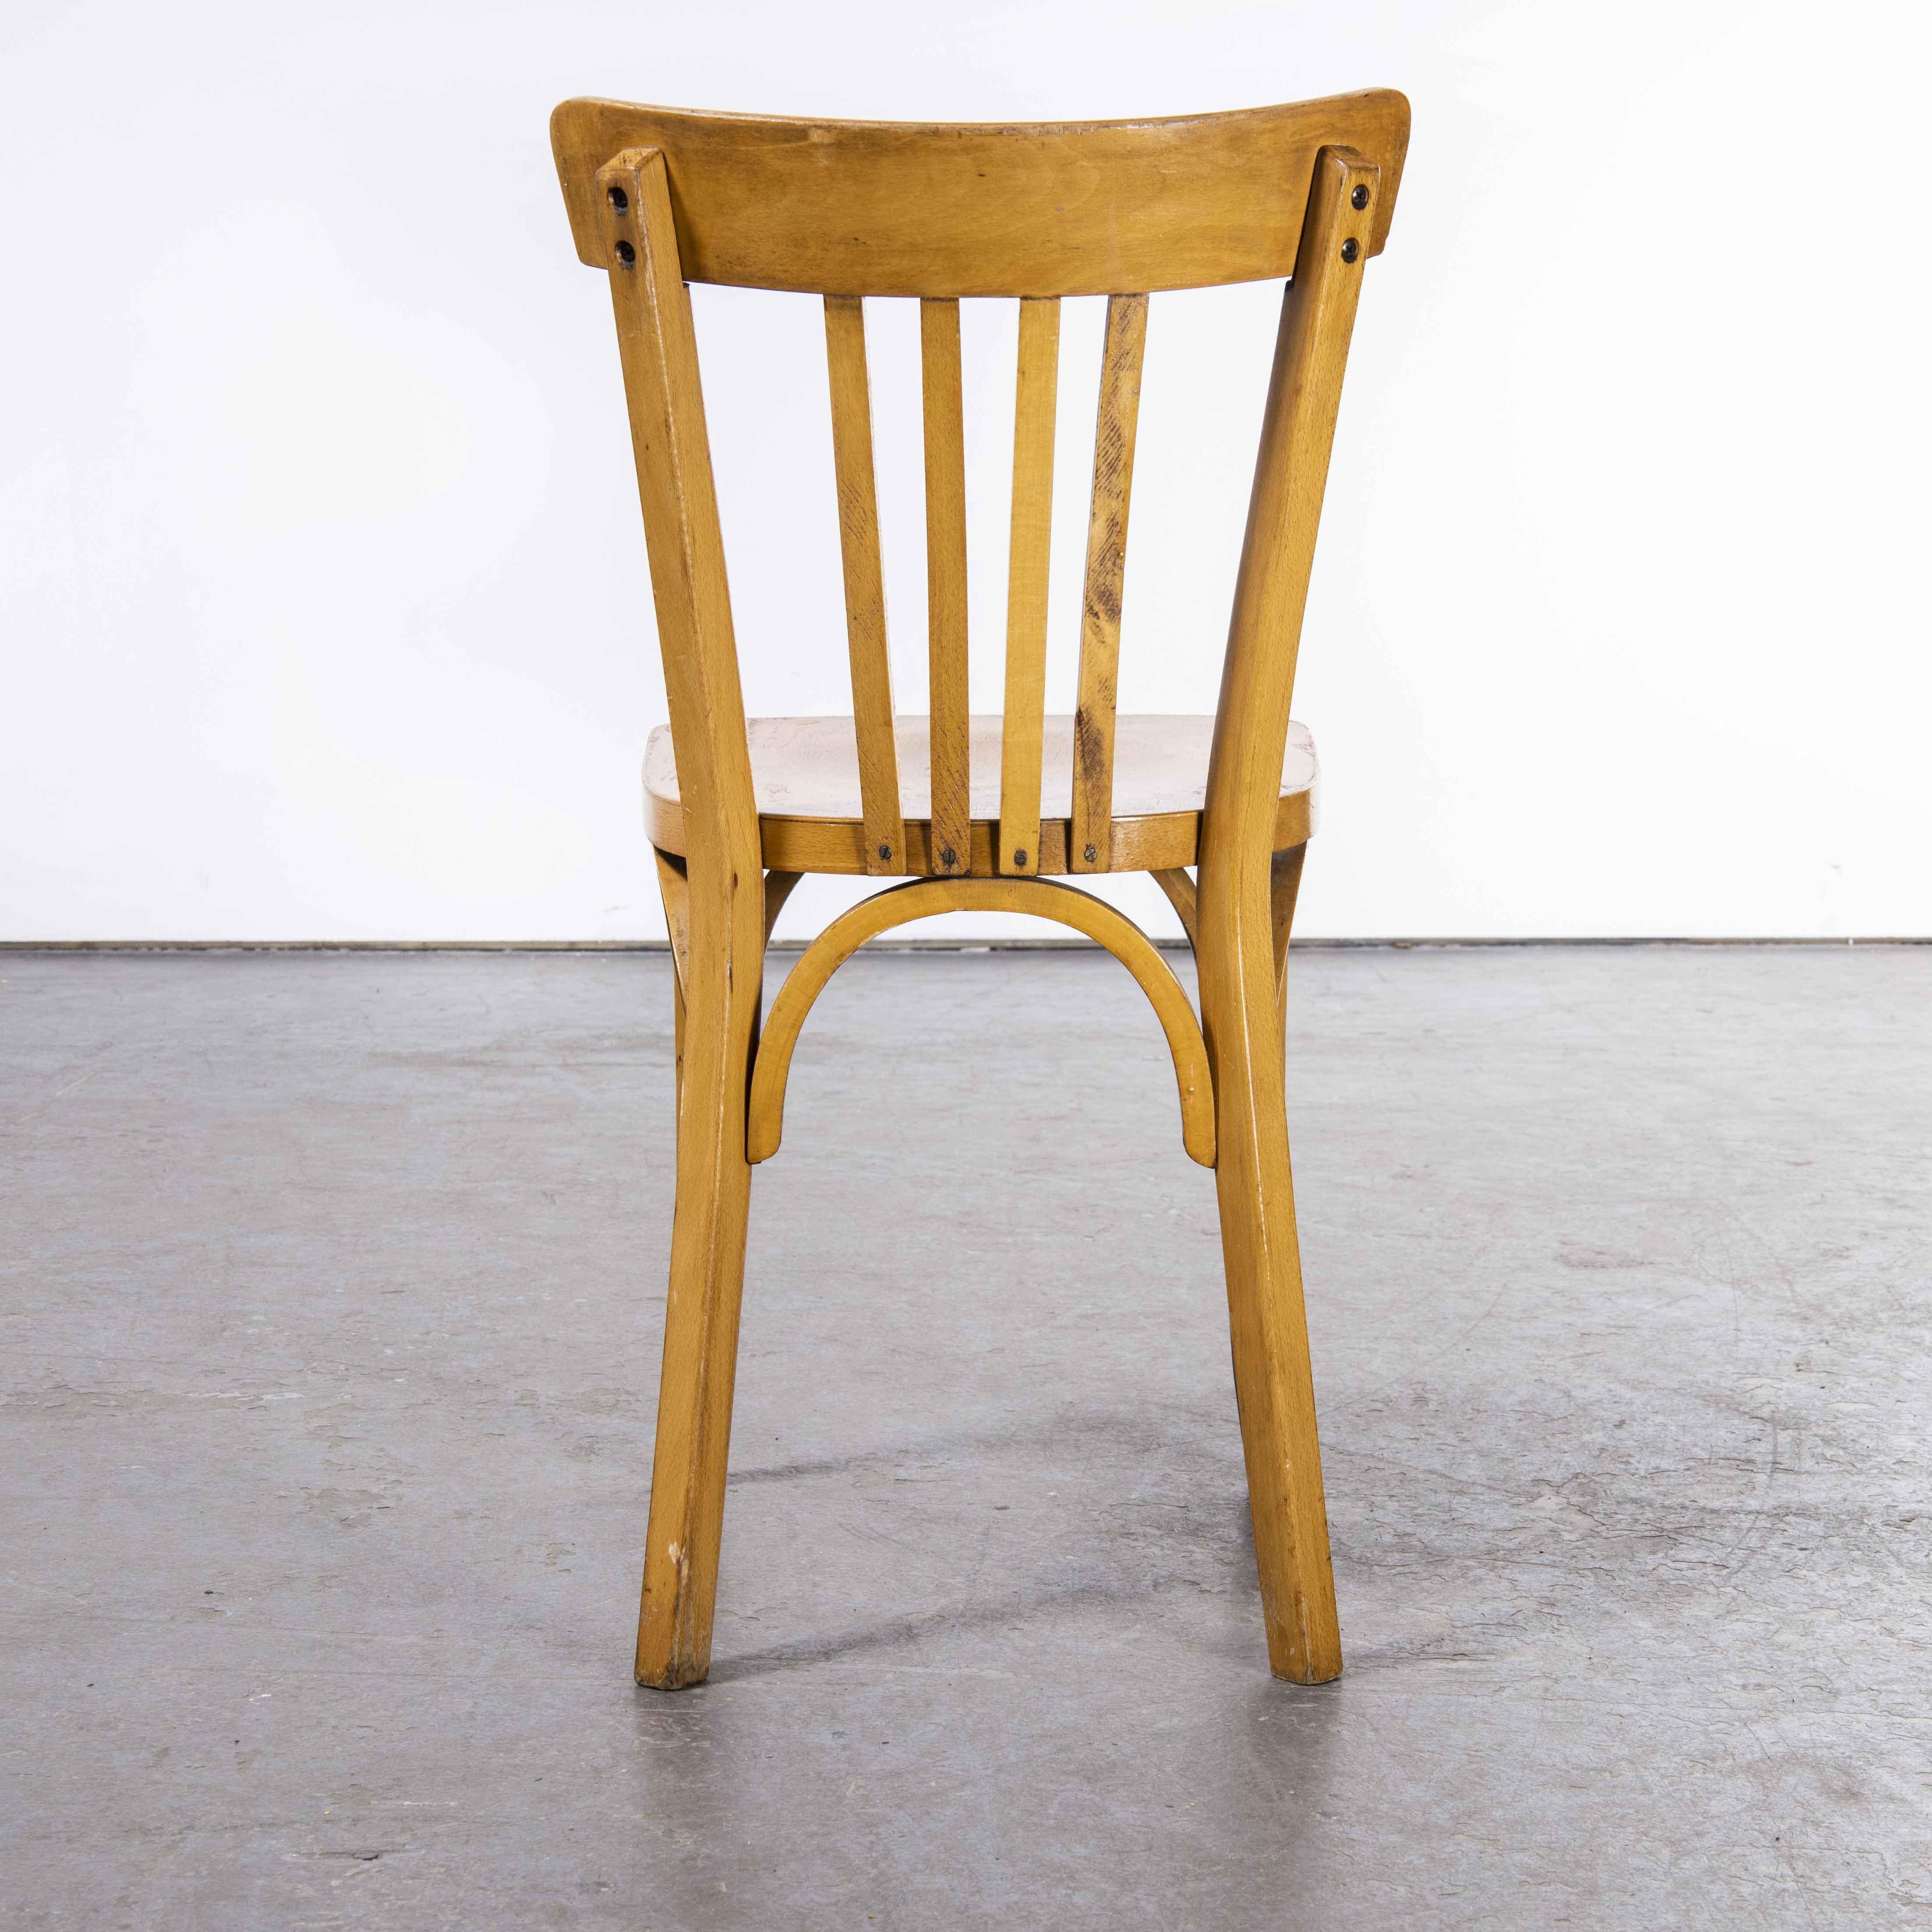 1950’s Baumann bentwood bistro dining chair – set of four (Model 1369)

1950’s Baumann bentwood bistro dining chair – set of four. Classic beech bistro chair made in France by the maker Baumann. Baumann is a slightly off the radar French producer